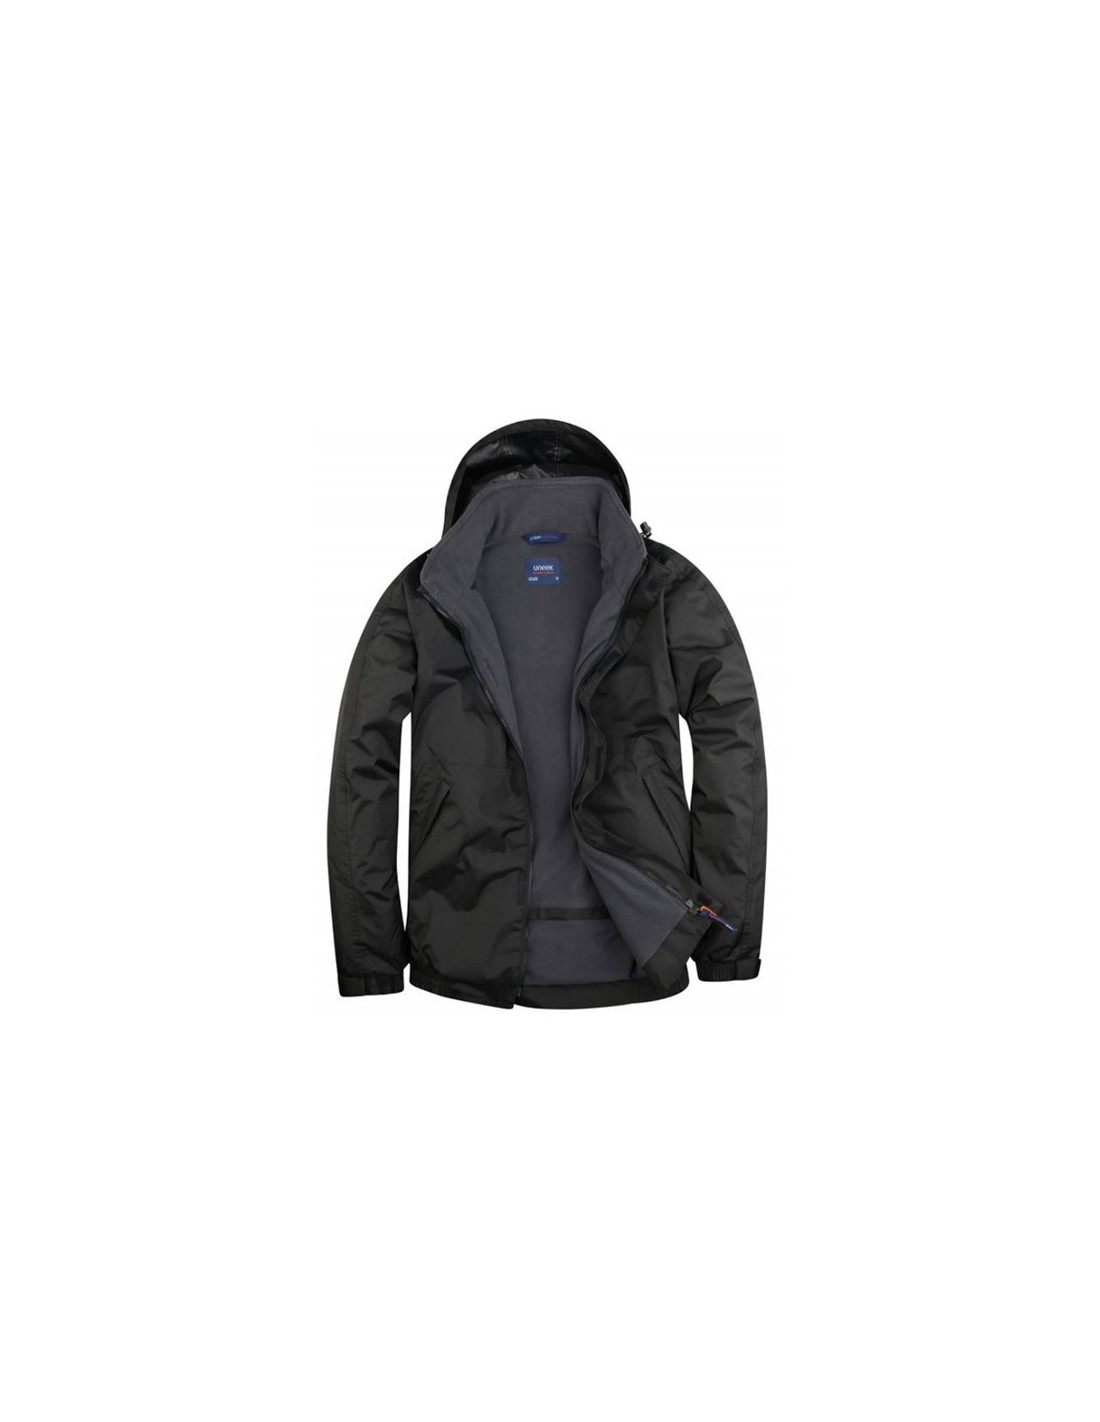 Uneek Clothing UC620 Premium Unisex Outdoor Jacket - Size XS to 4XL